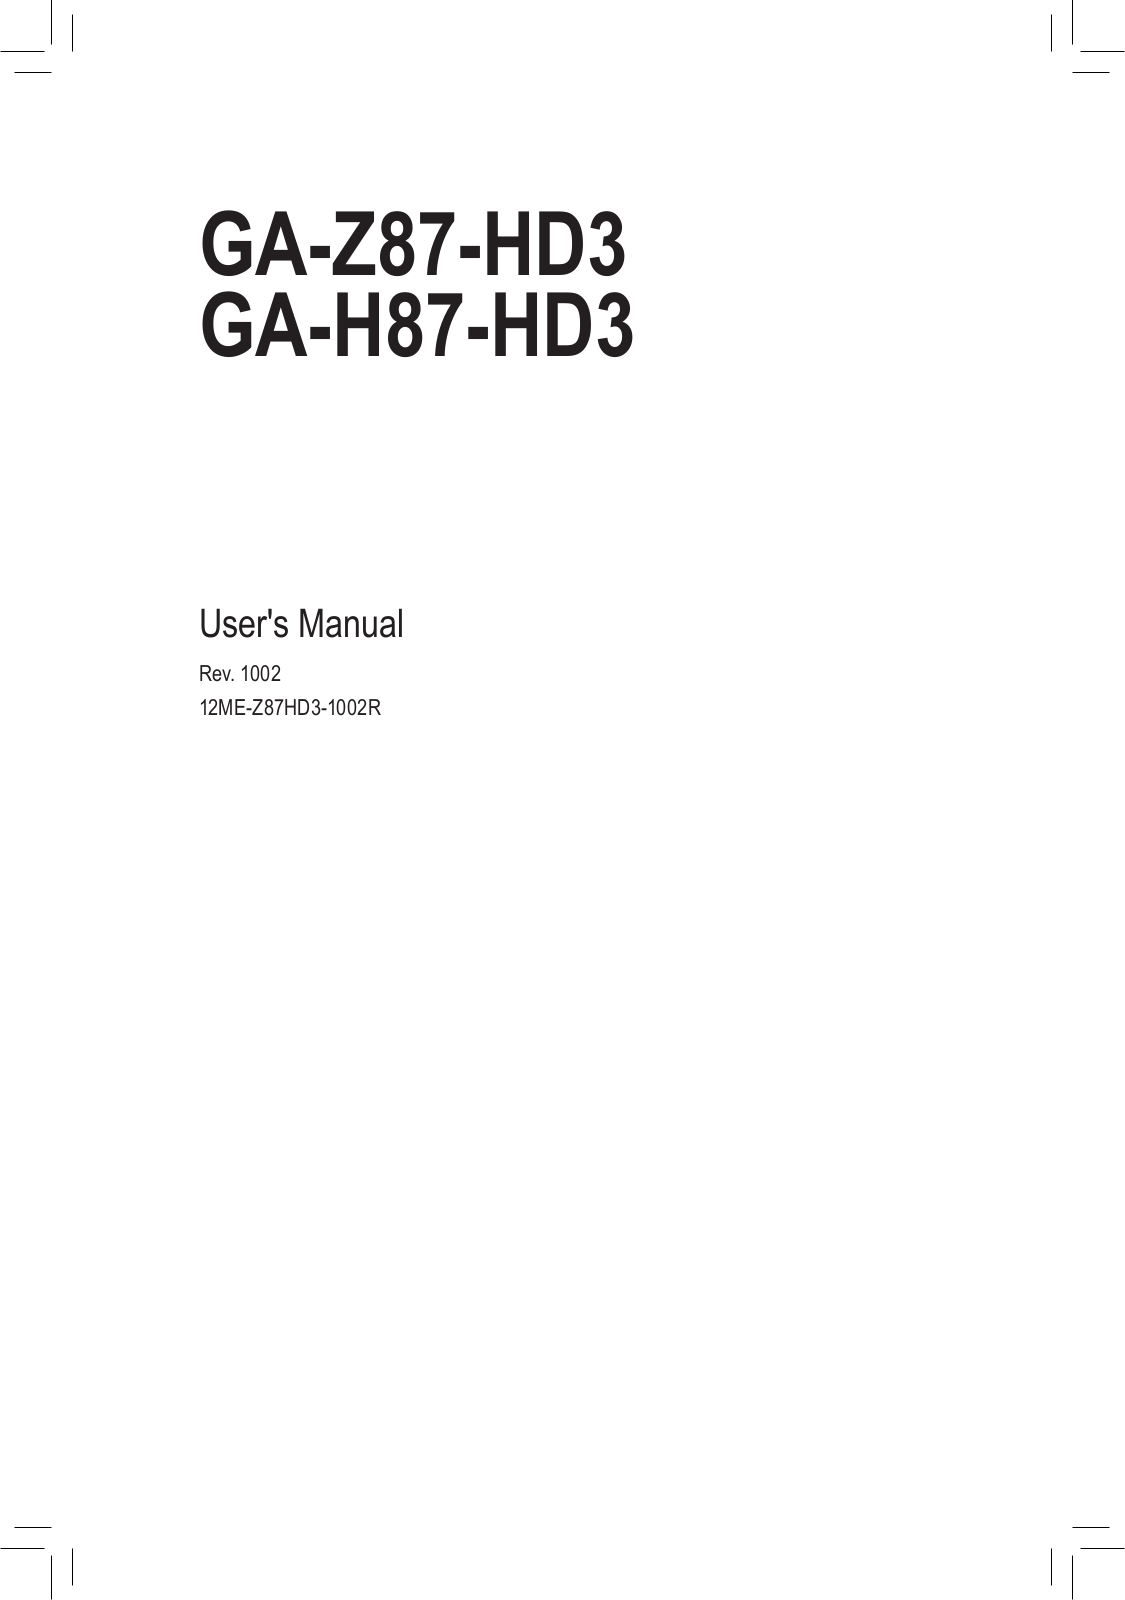 Gigabyte GA-H87-HD3, GA-Z87-HD3 Manual